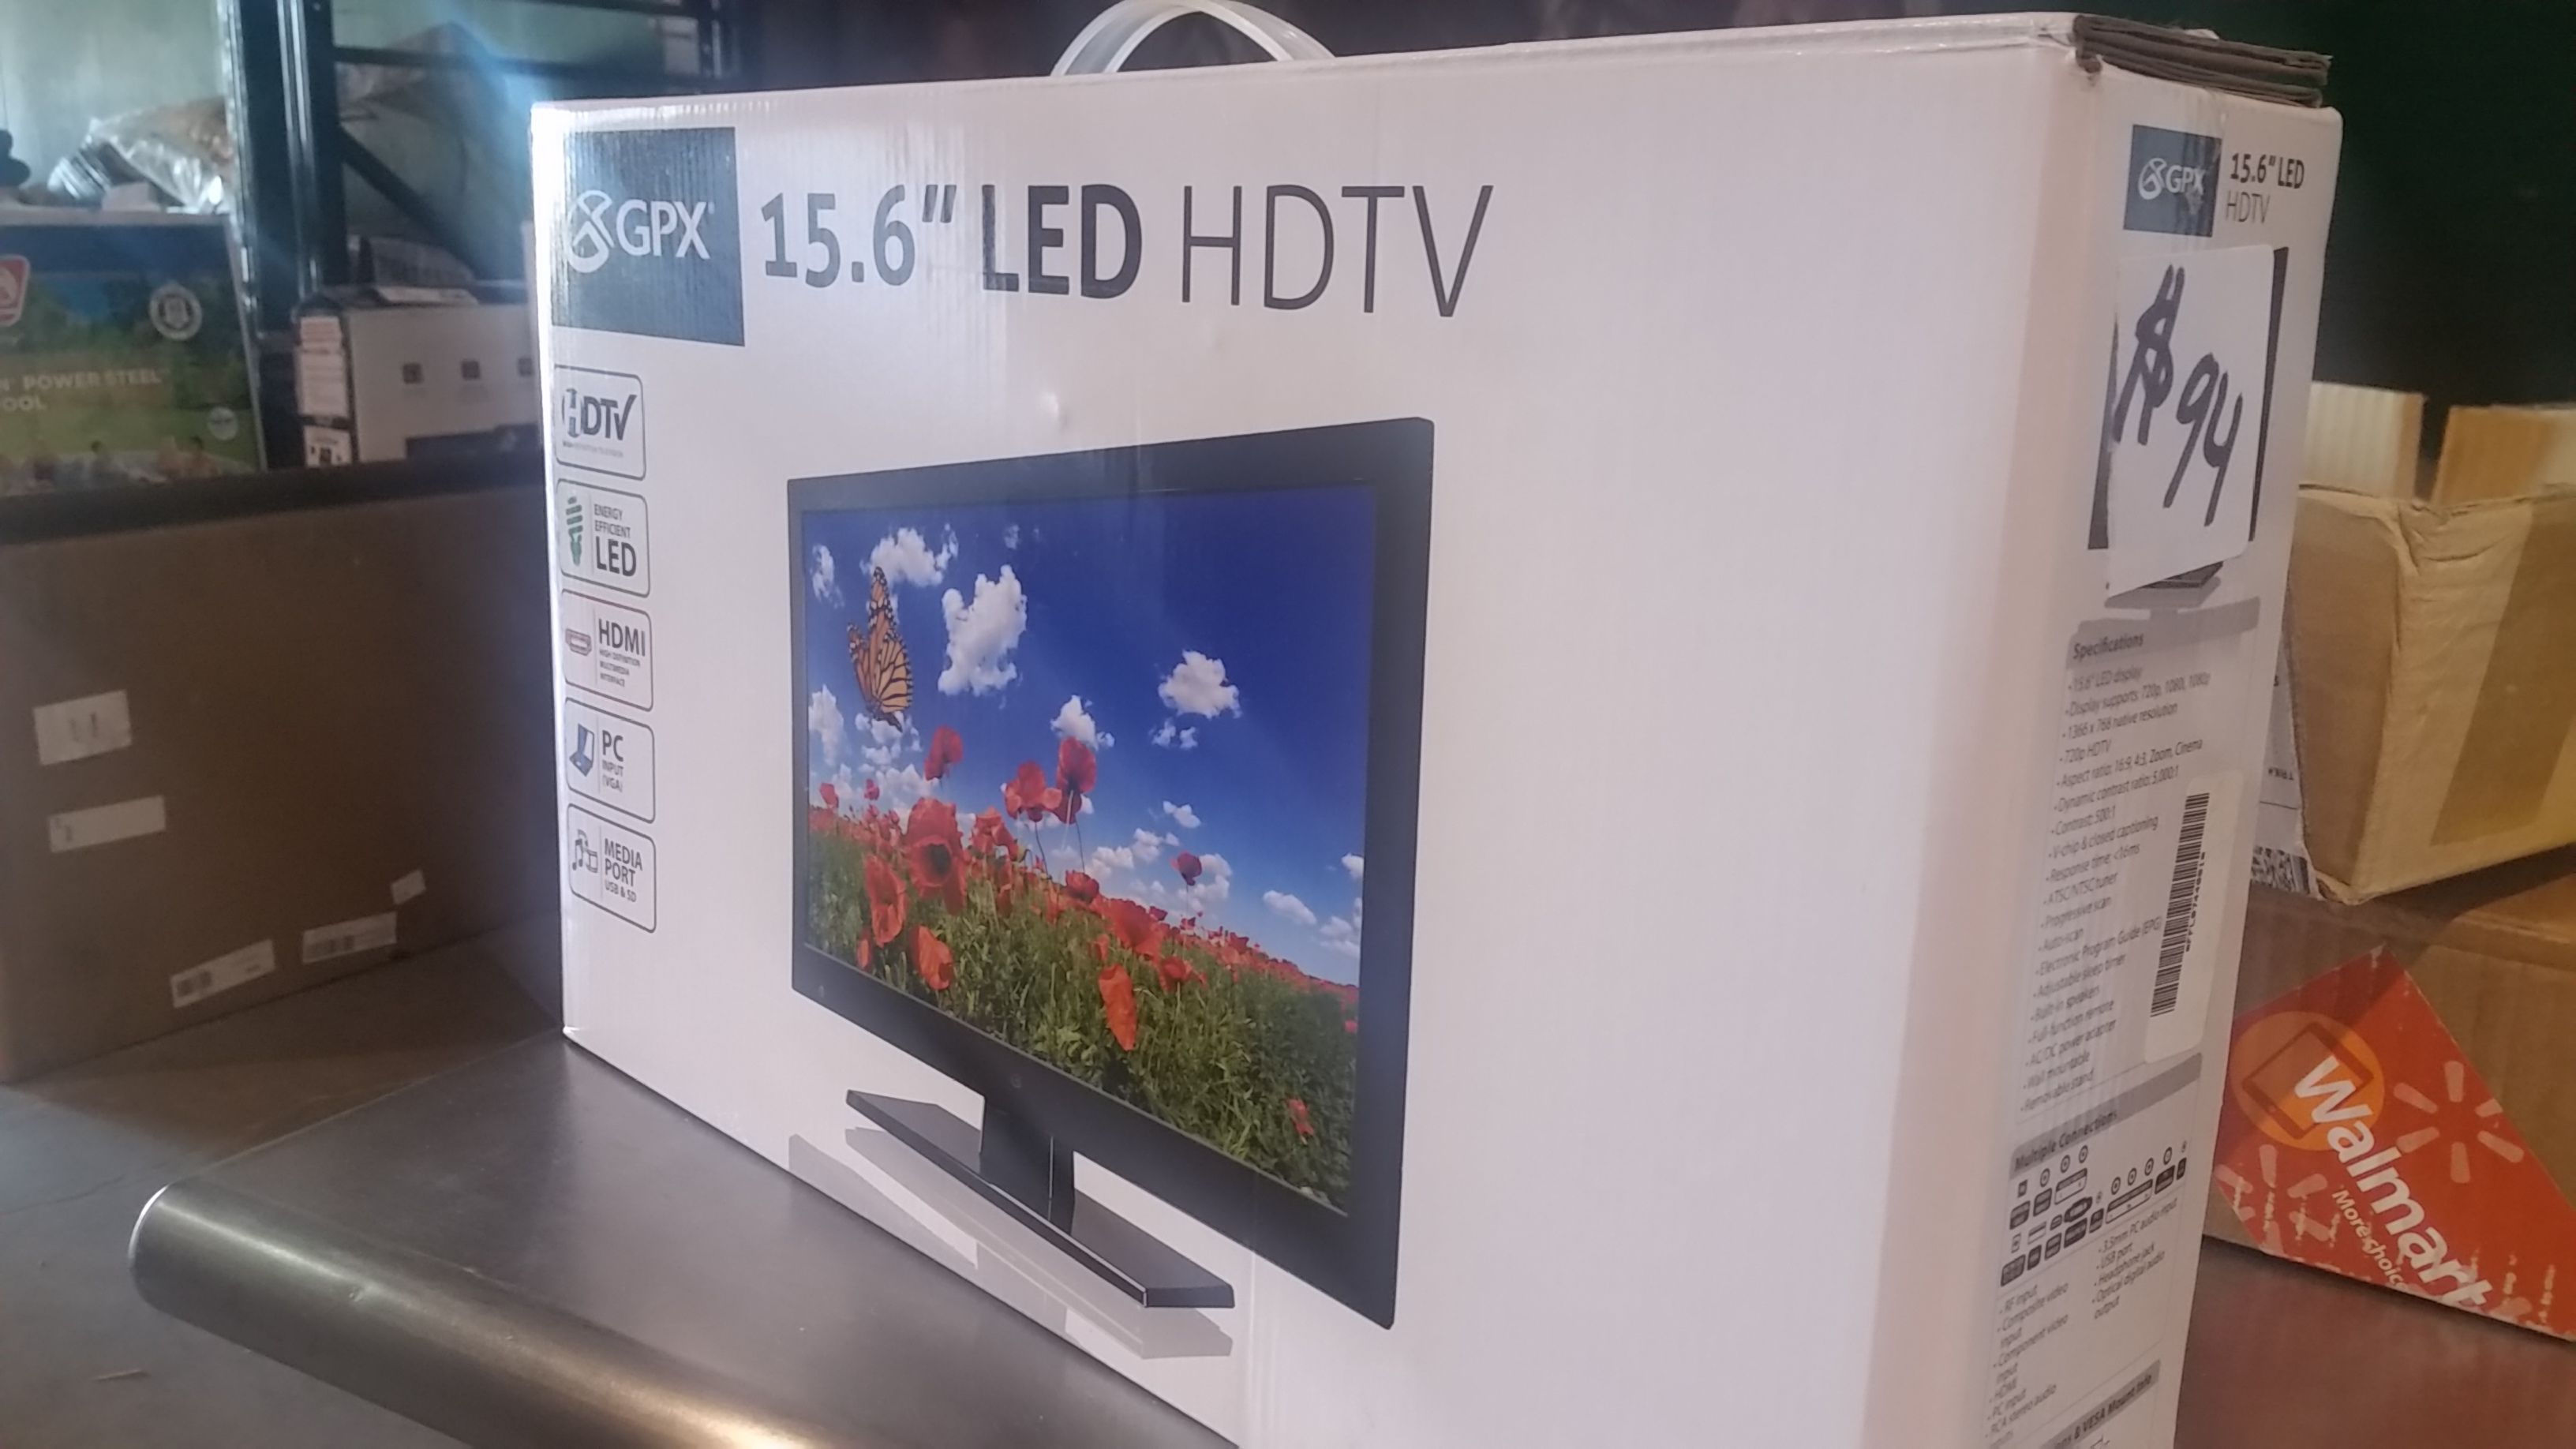 Gpx new 15.6 led tv